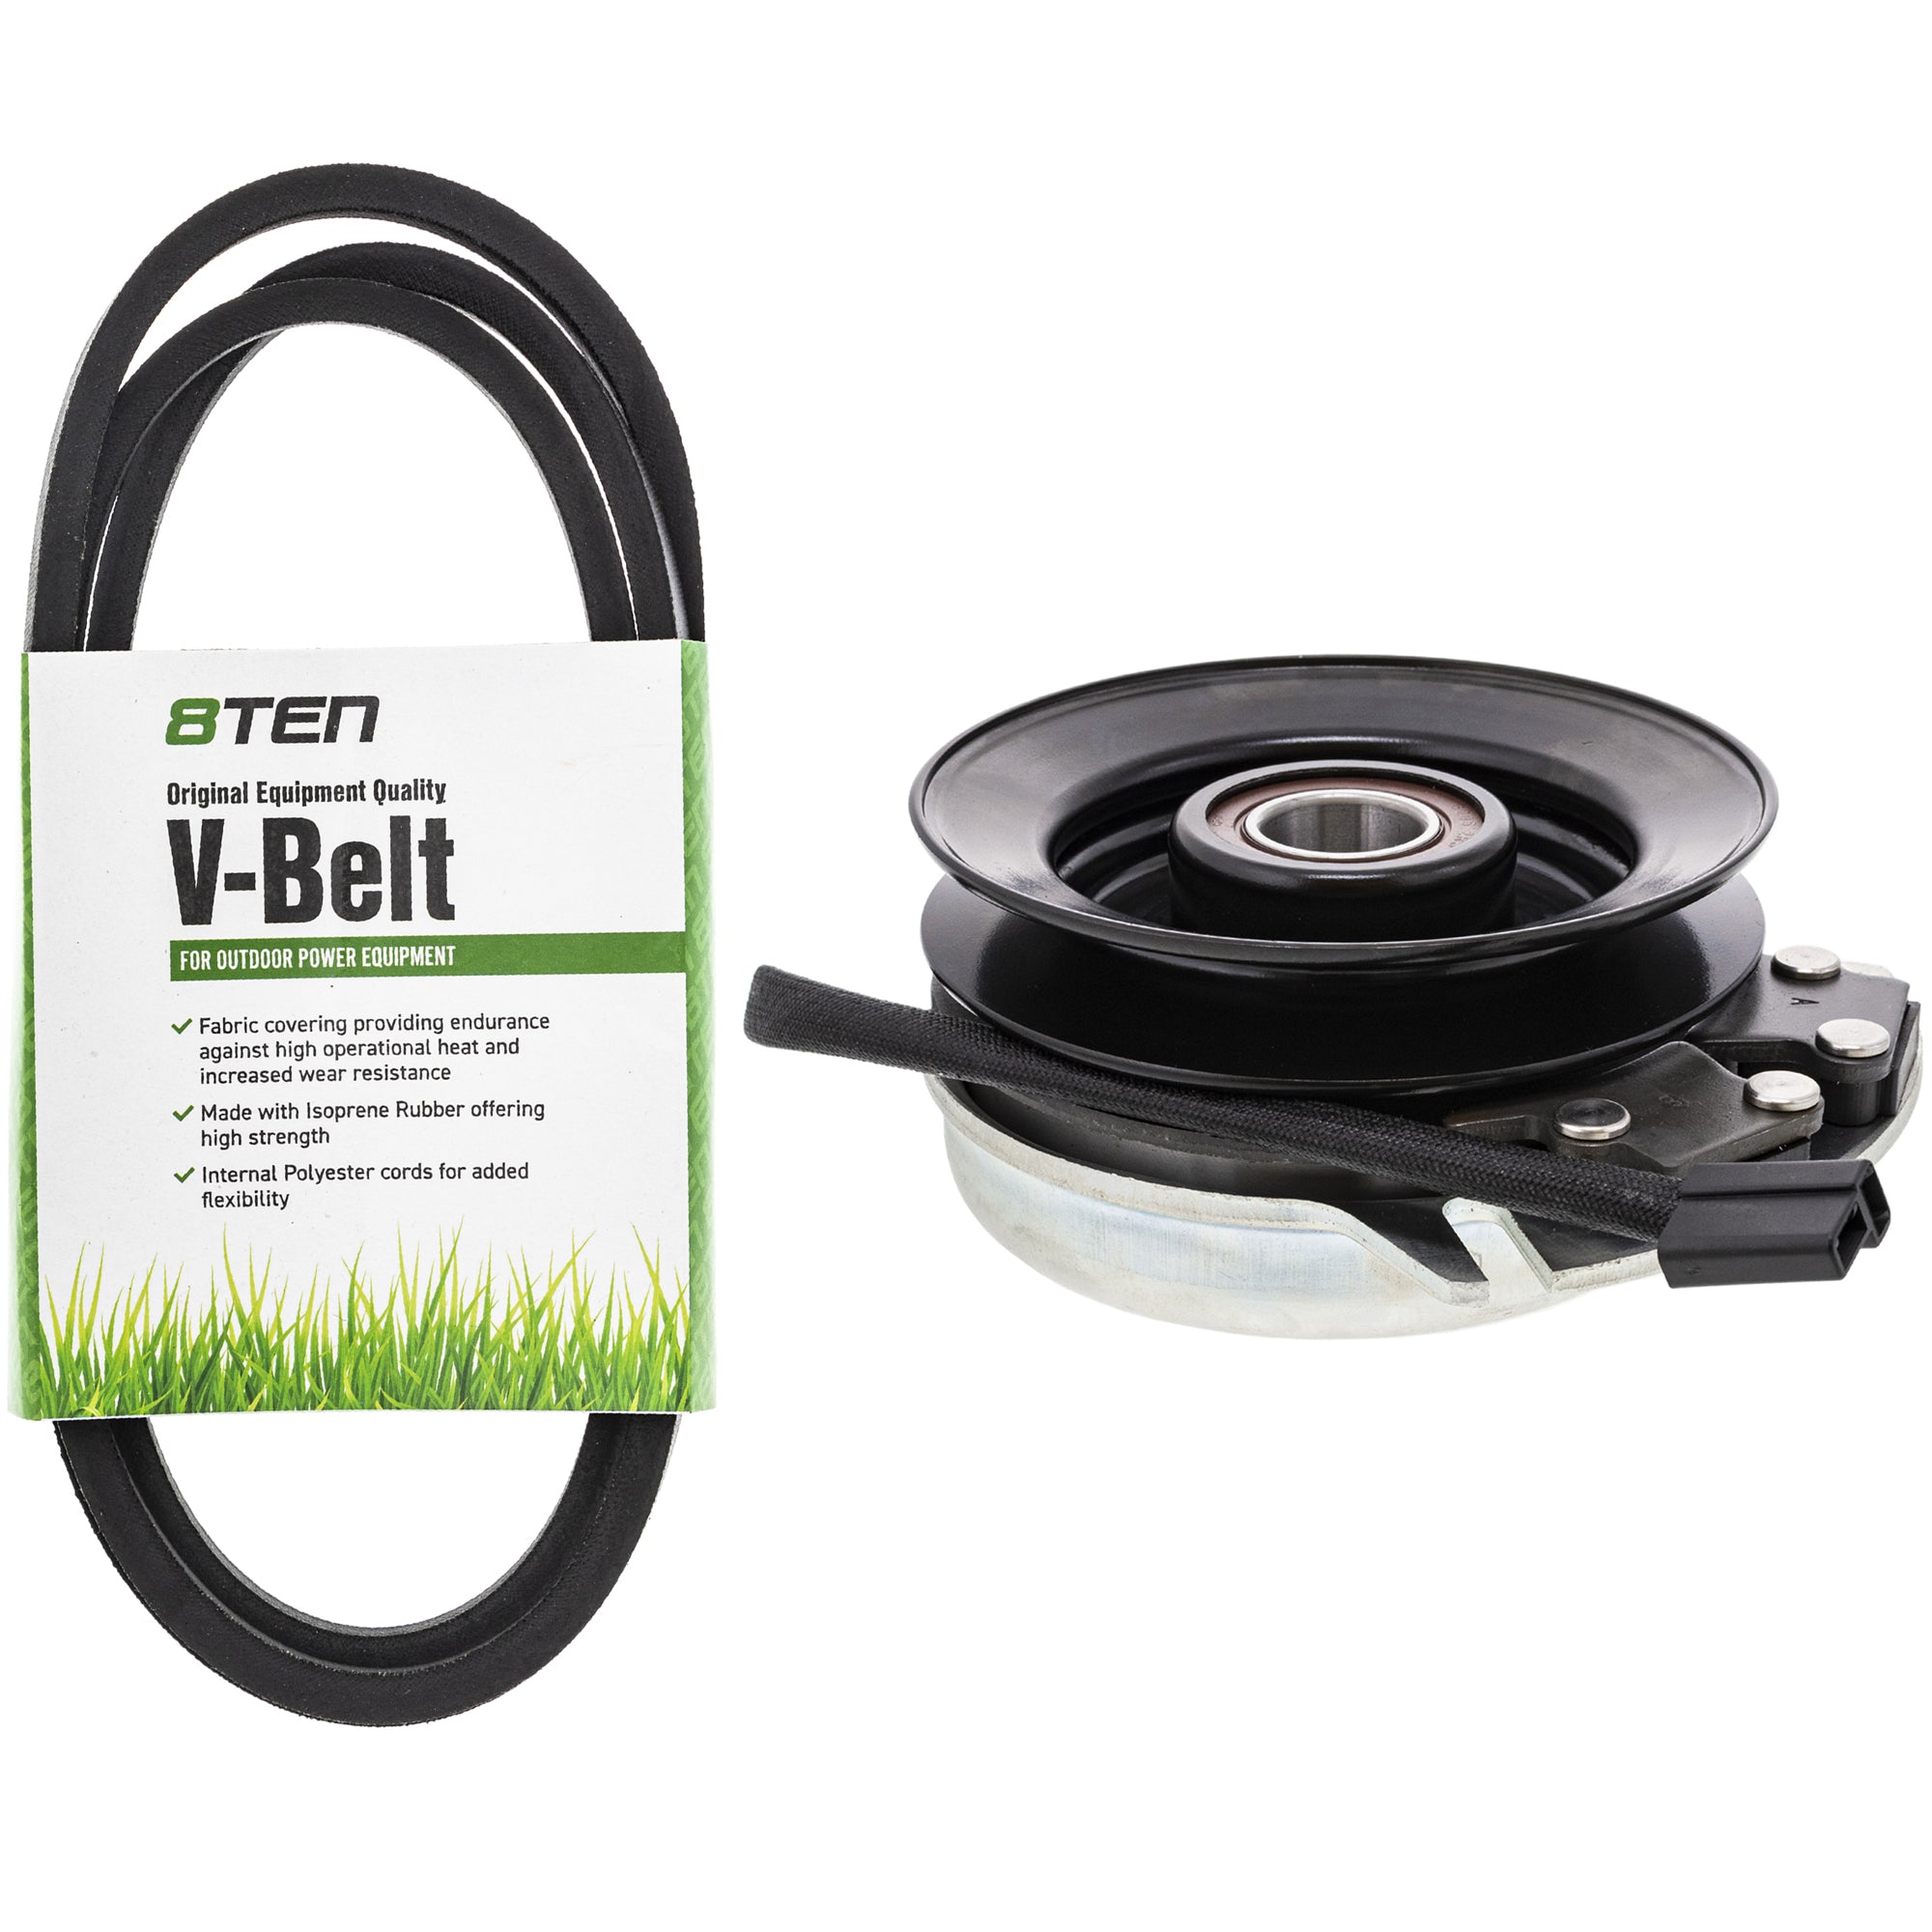 Electric PTO Clutch & Belt Kit for Xtreme Warner Stens Snapper Toro Landscape SIMPLICITY 8TEN MK1006380